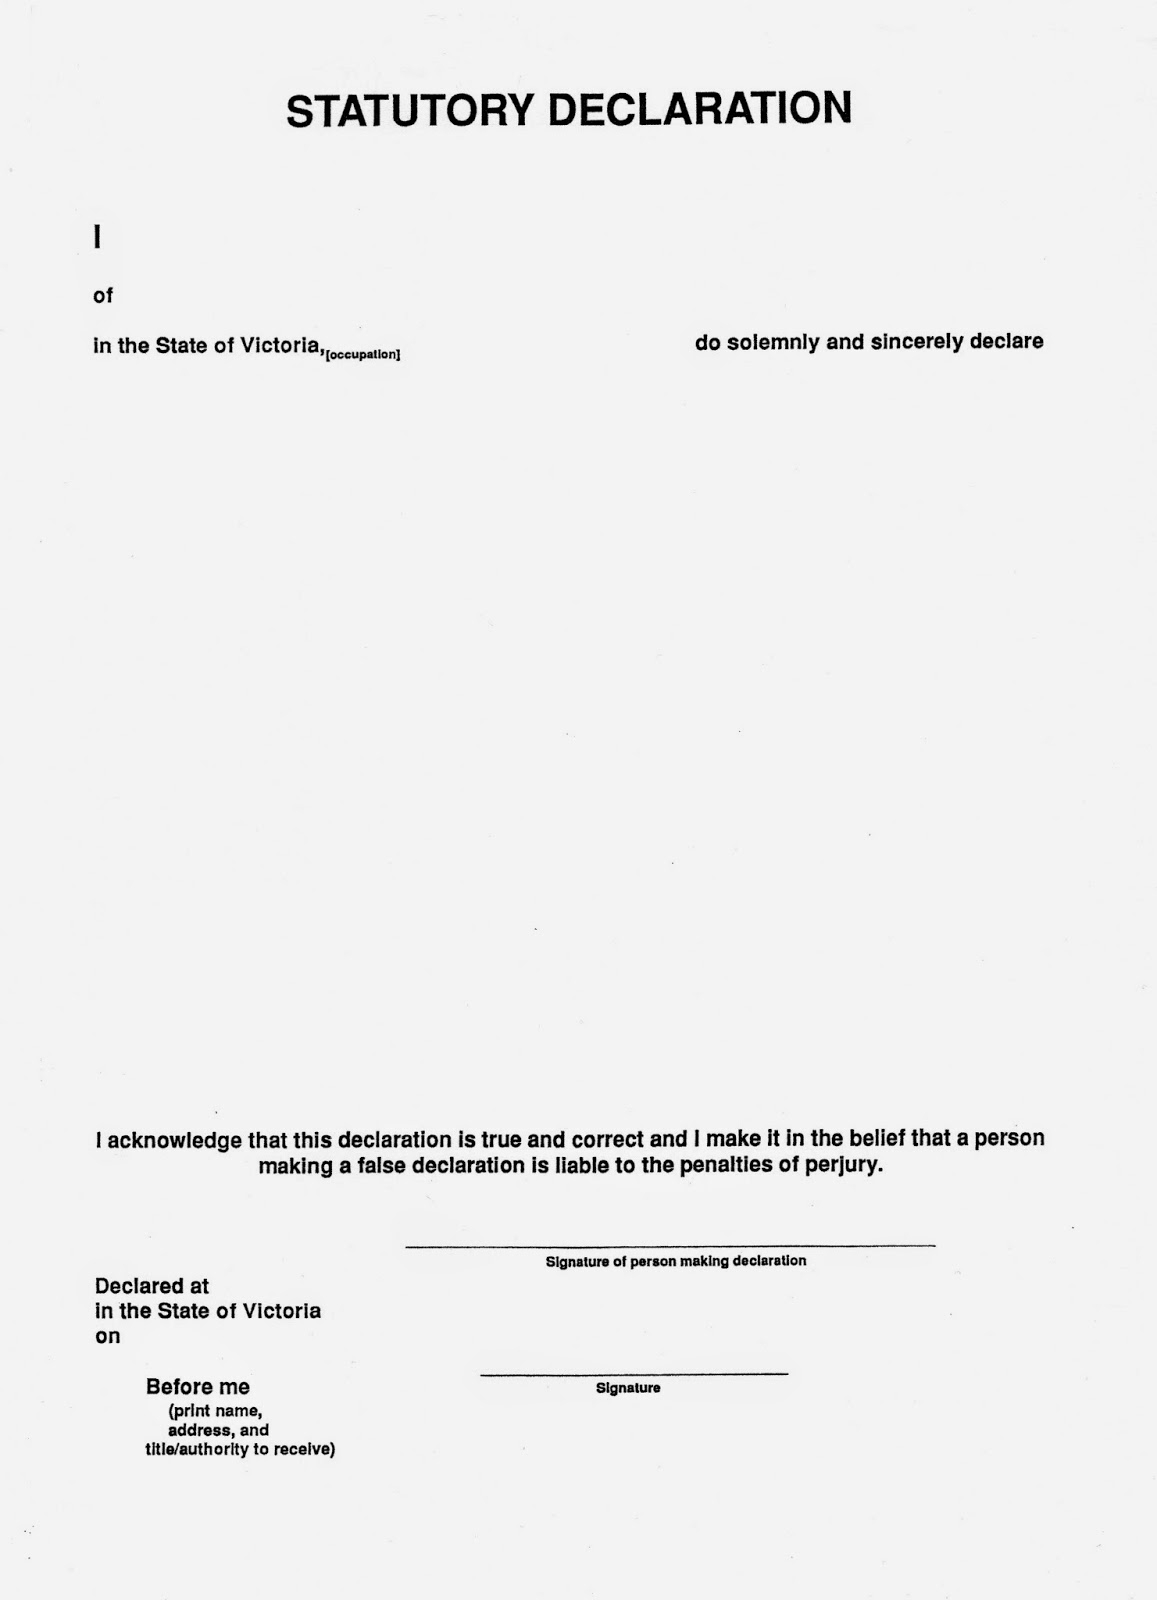 statutory declaration thesis